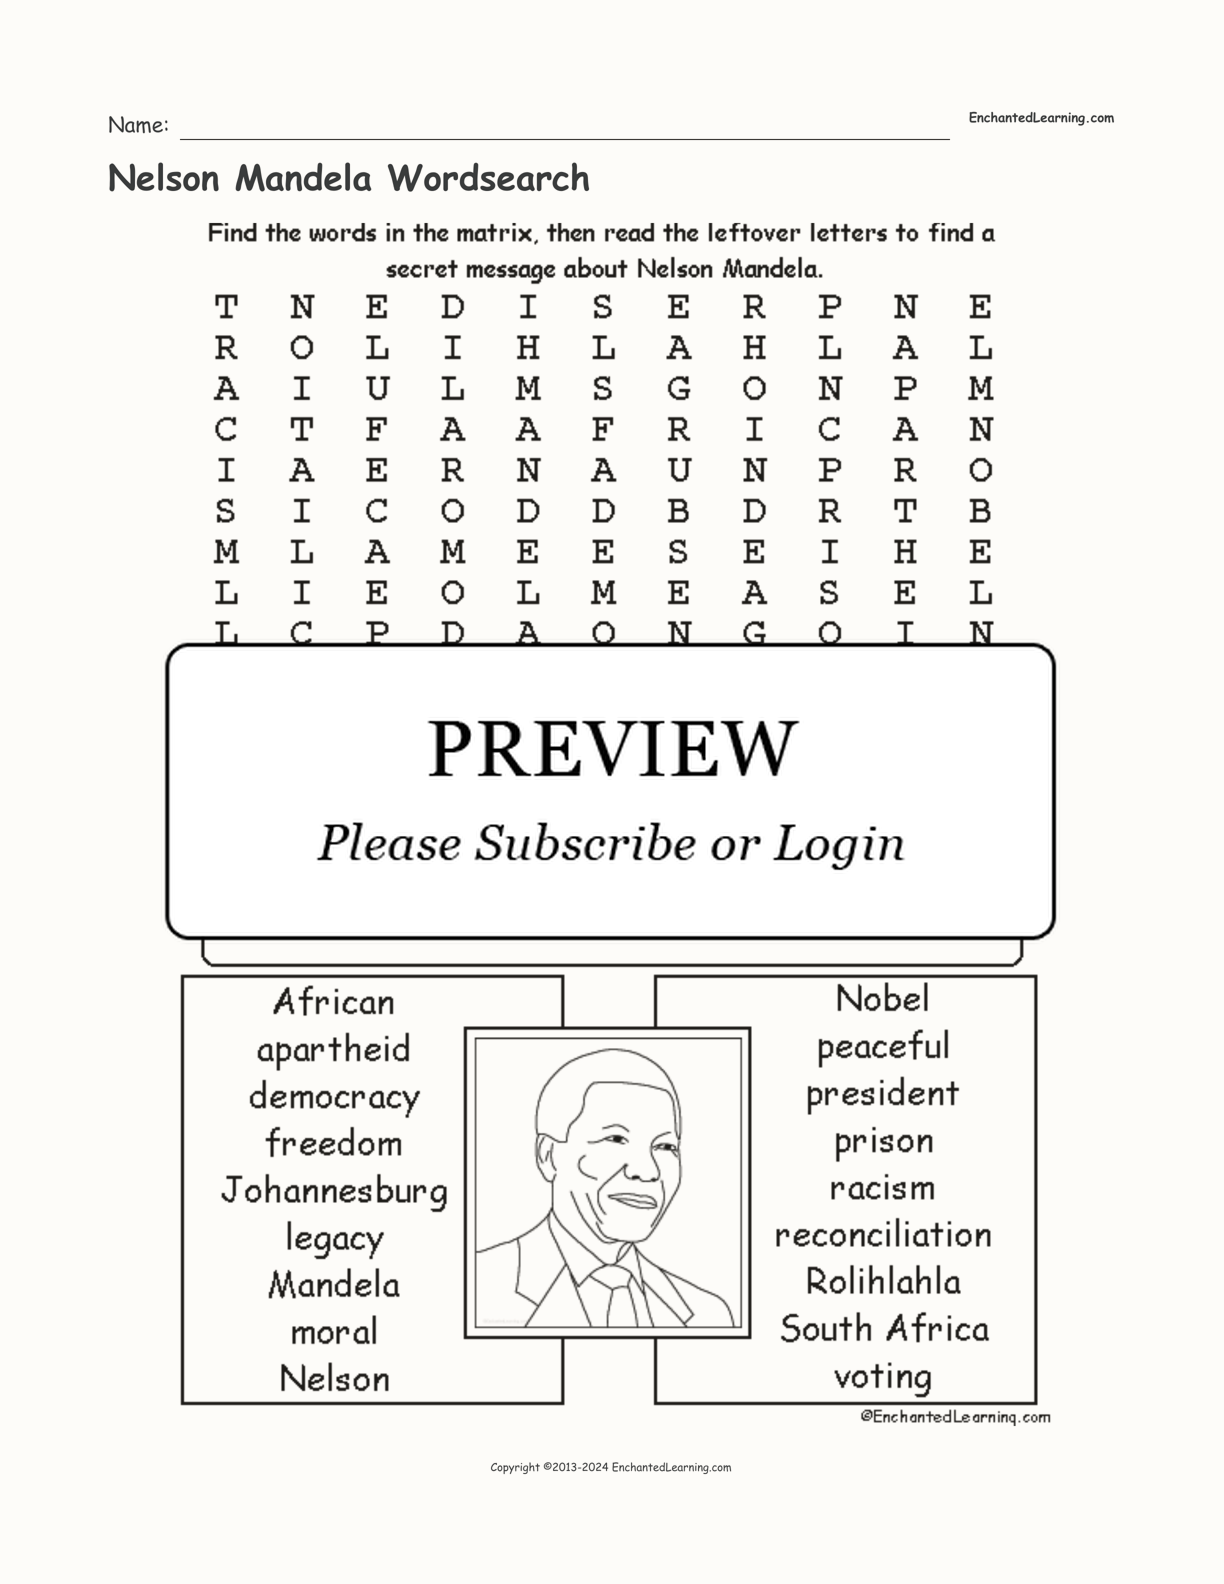 Nelson Mandela Wordsearch interactive worksheet page 1